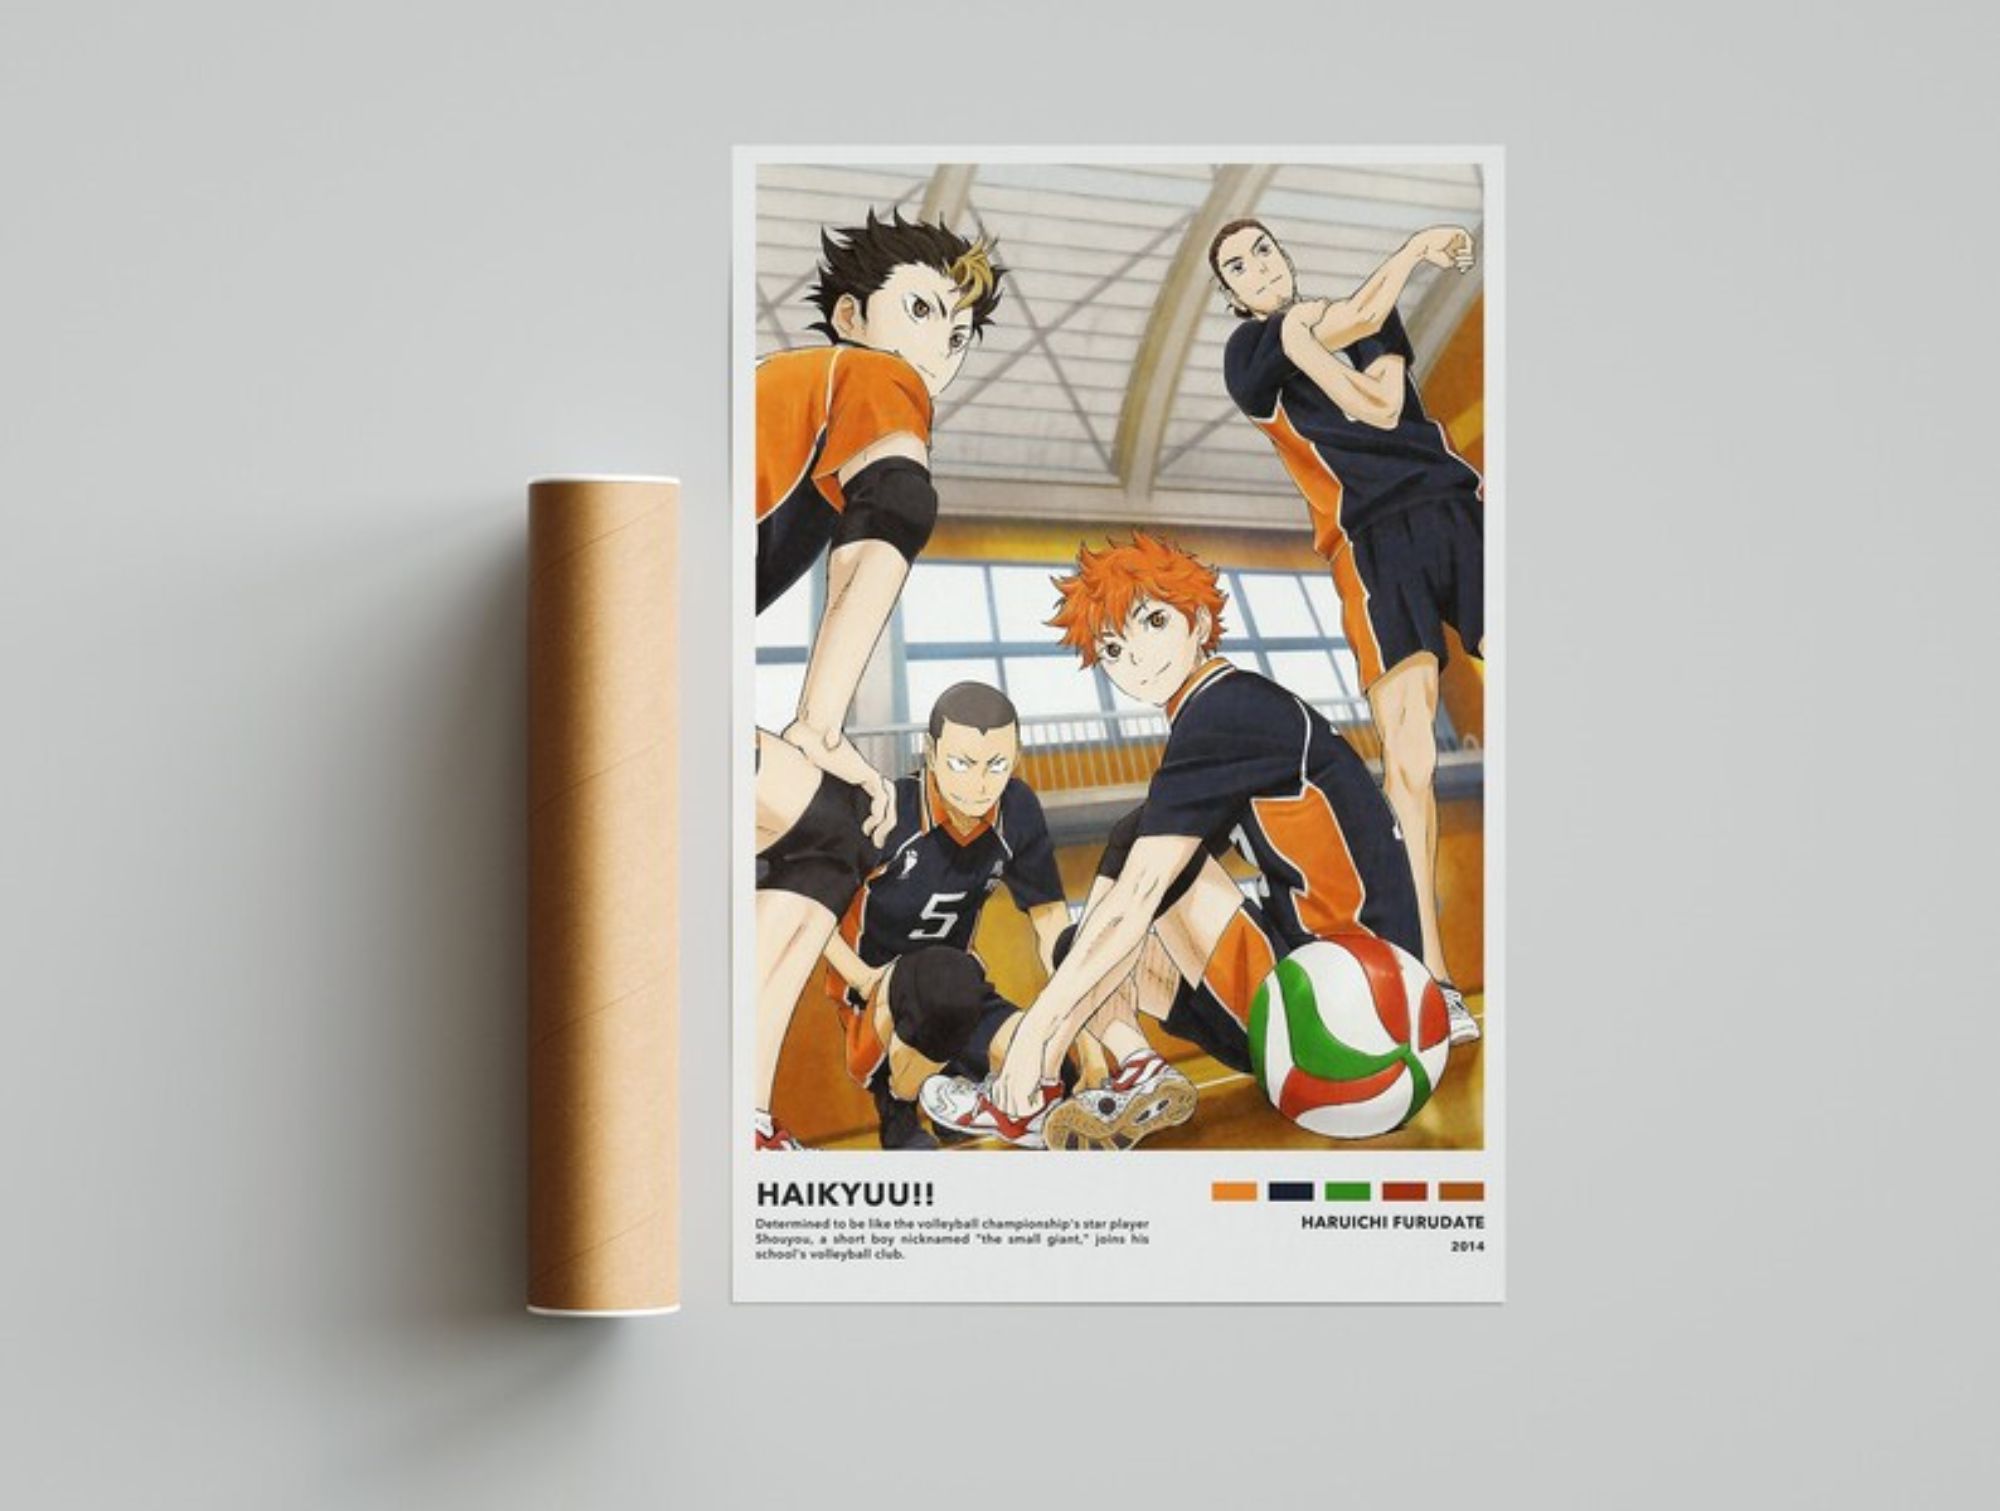 haikyuu poster haruichi furudate minimalist anime poster vintage